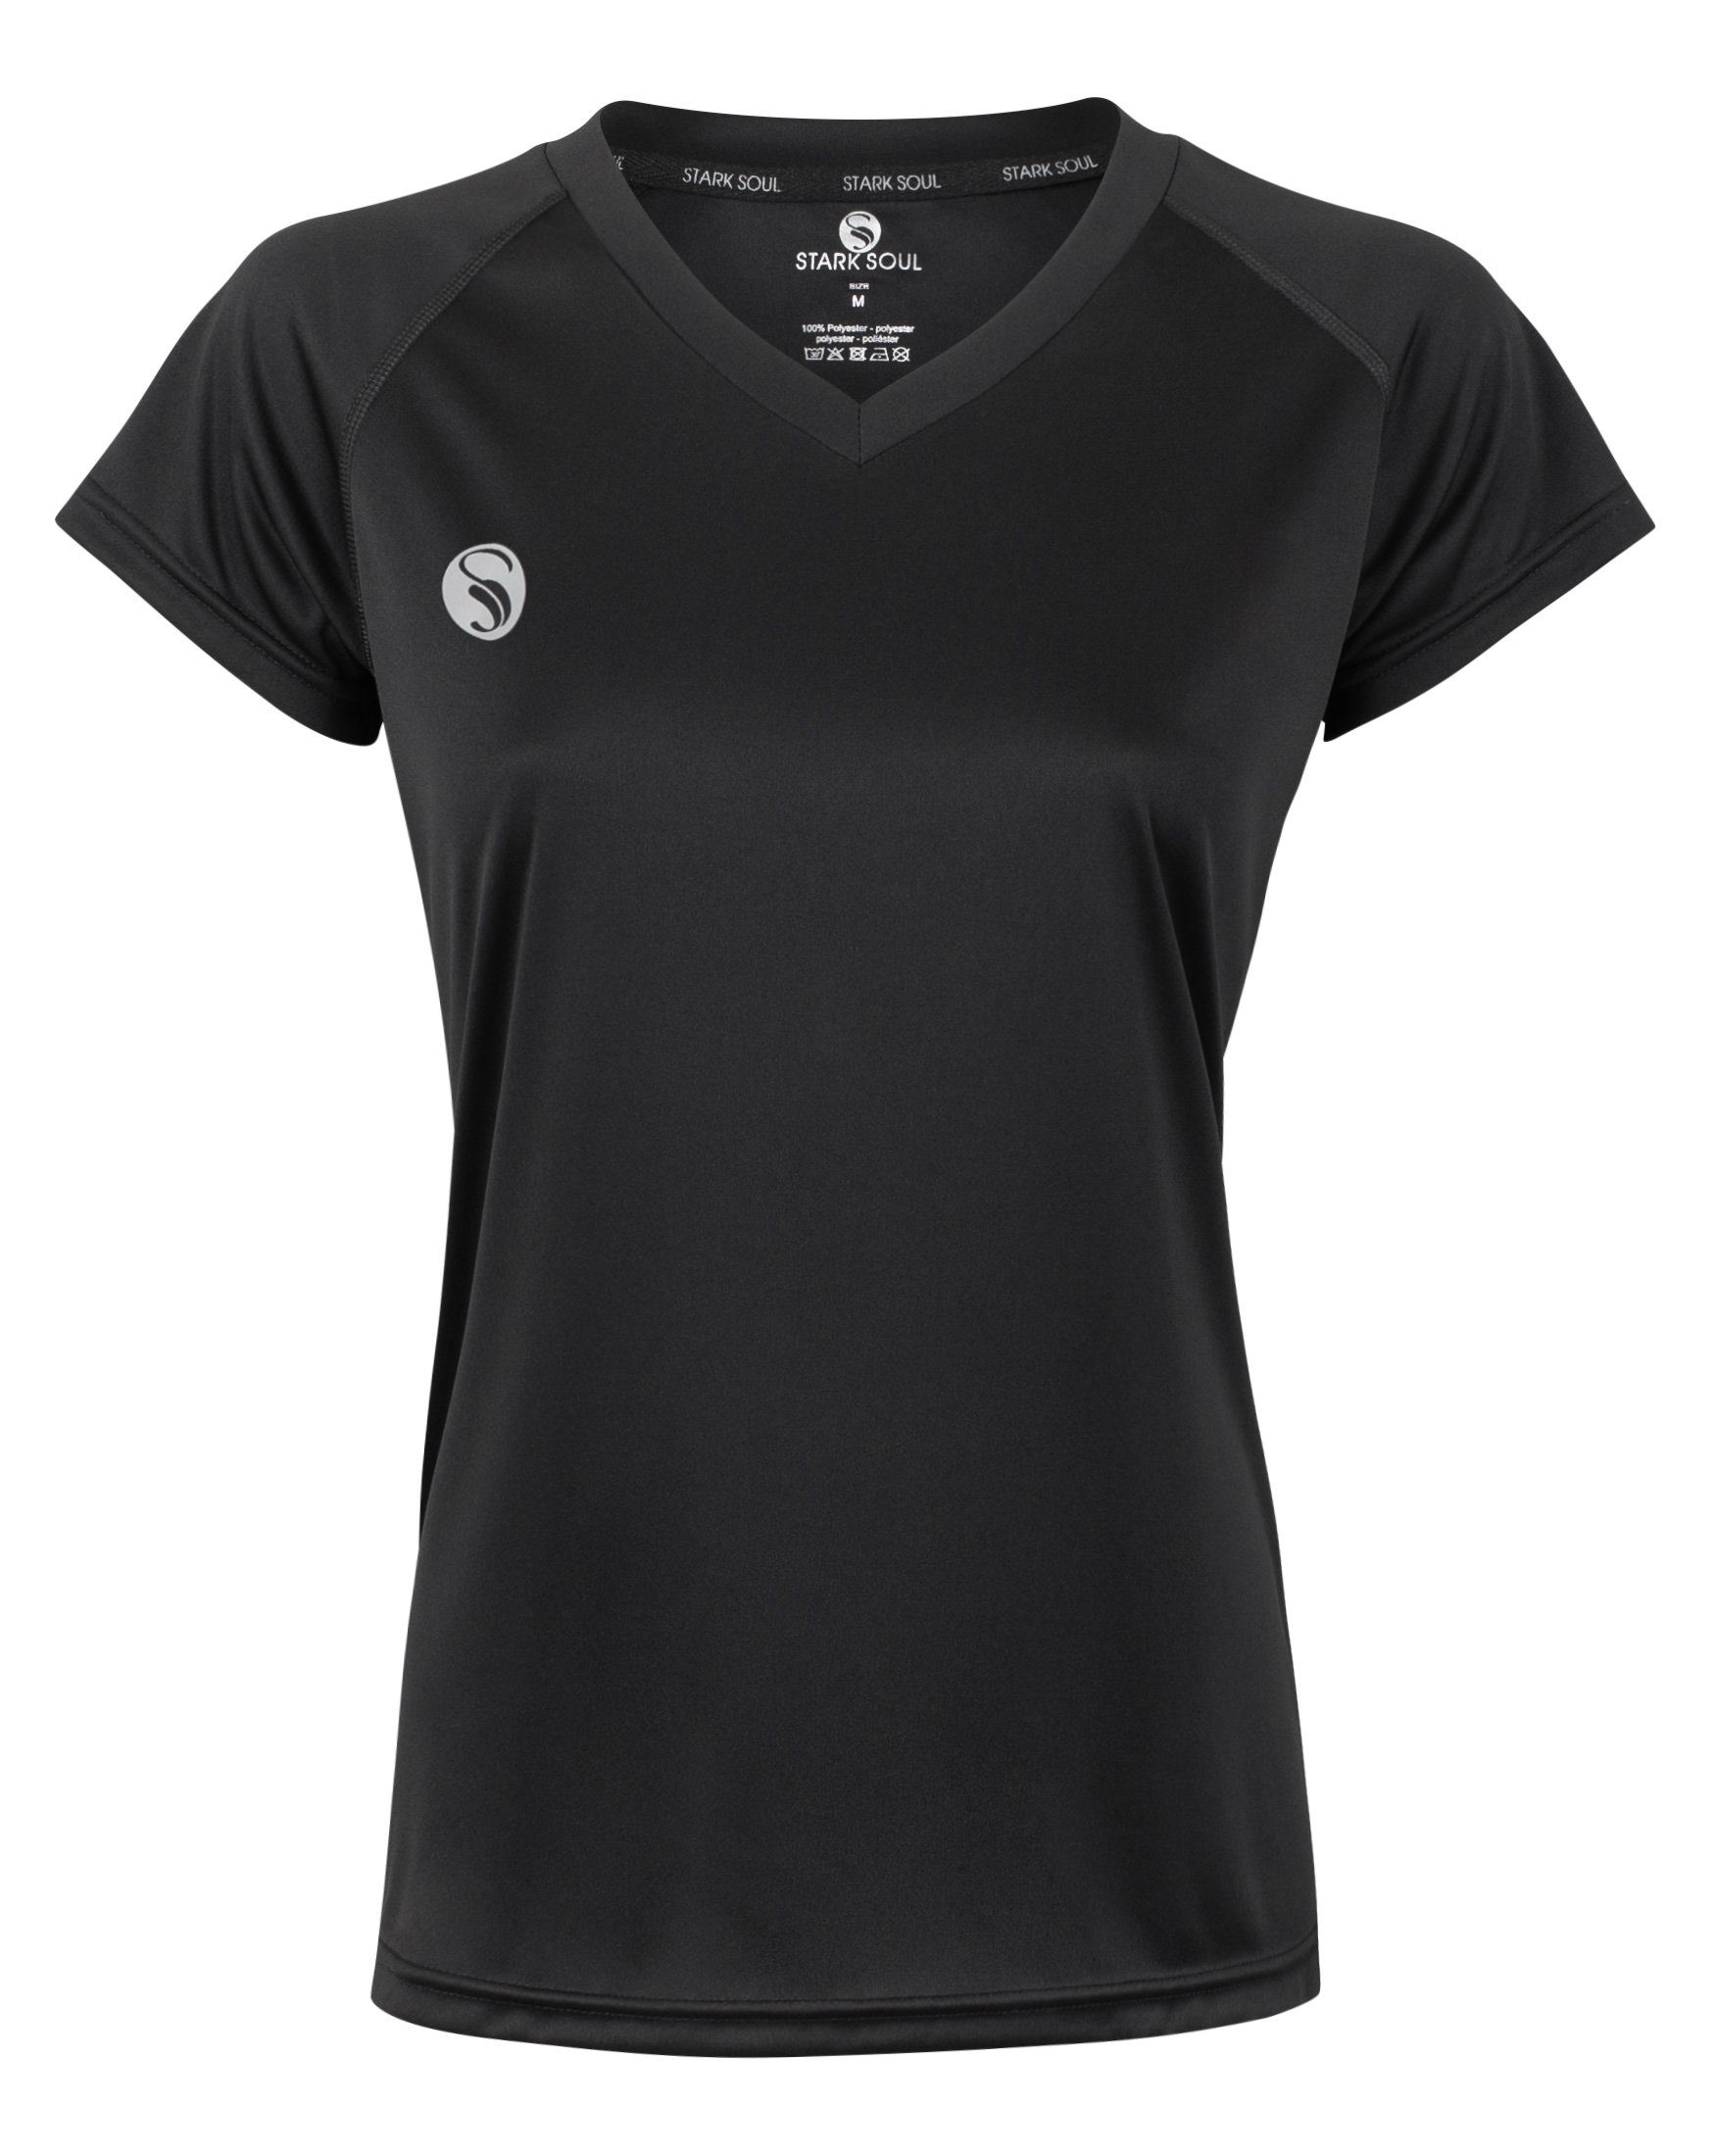 Stark Soul® Sporttop Sport Shirt aus Quick Dry Material - Schnelltrocknend Schwarz